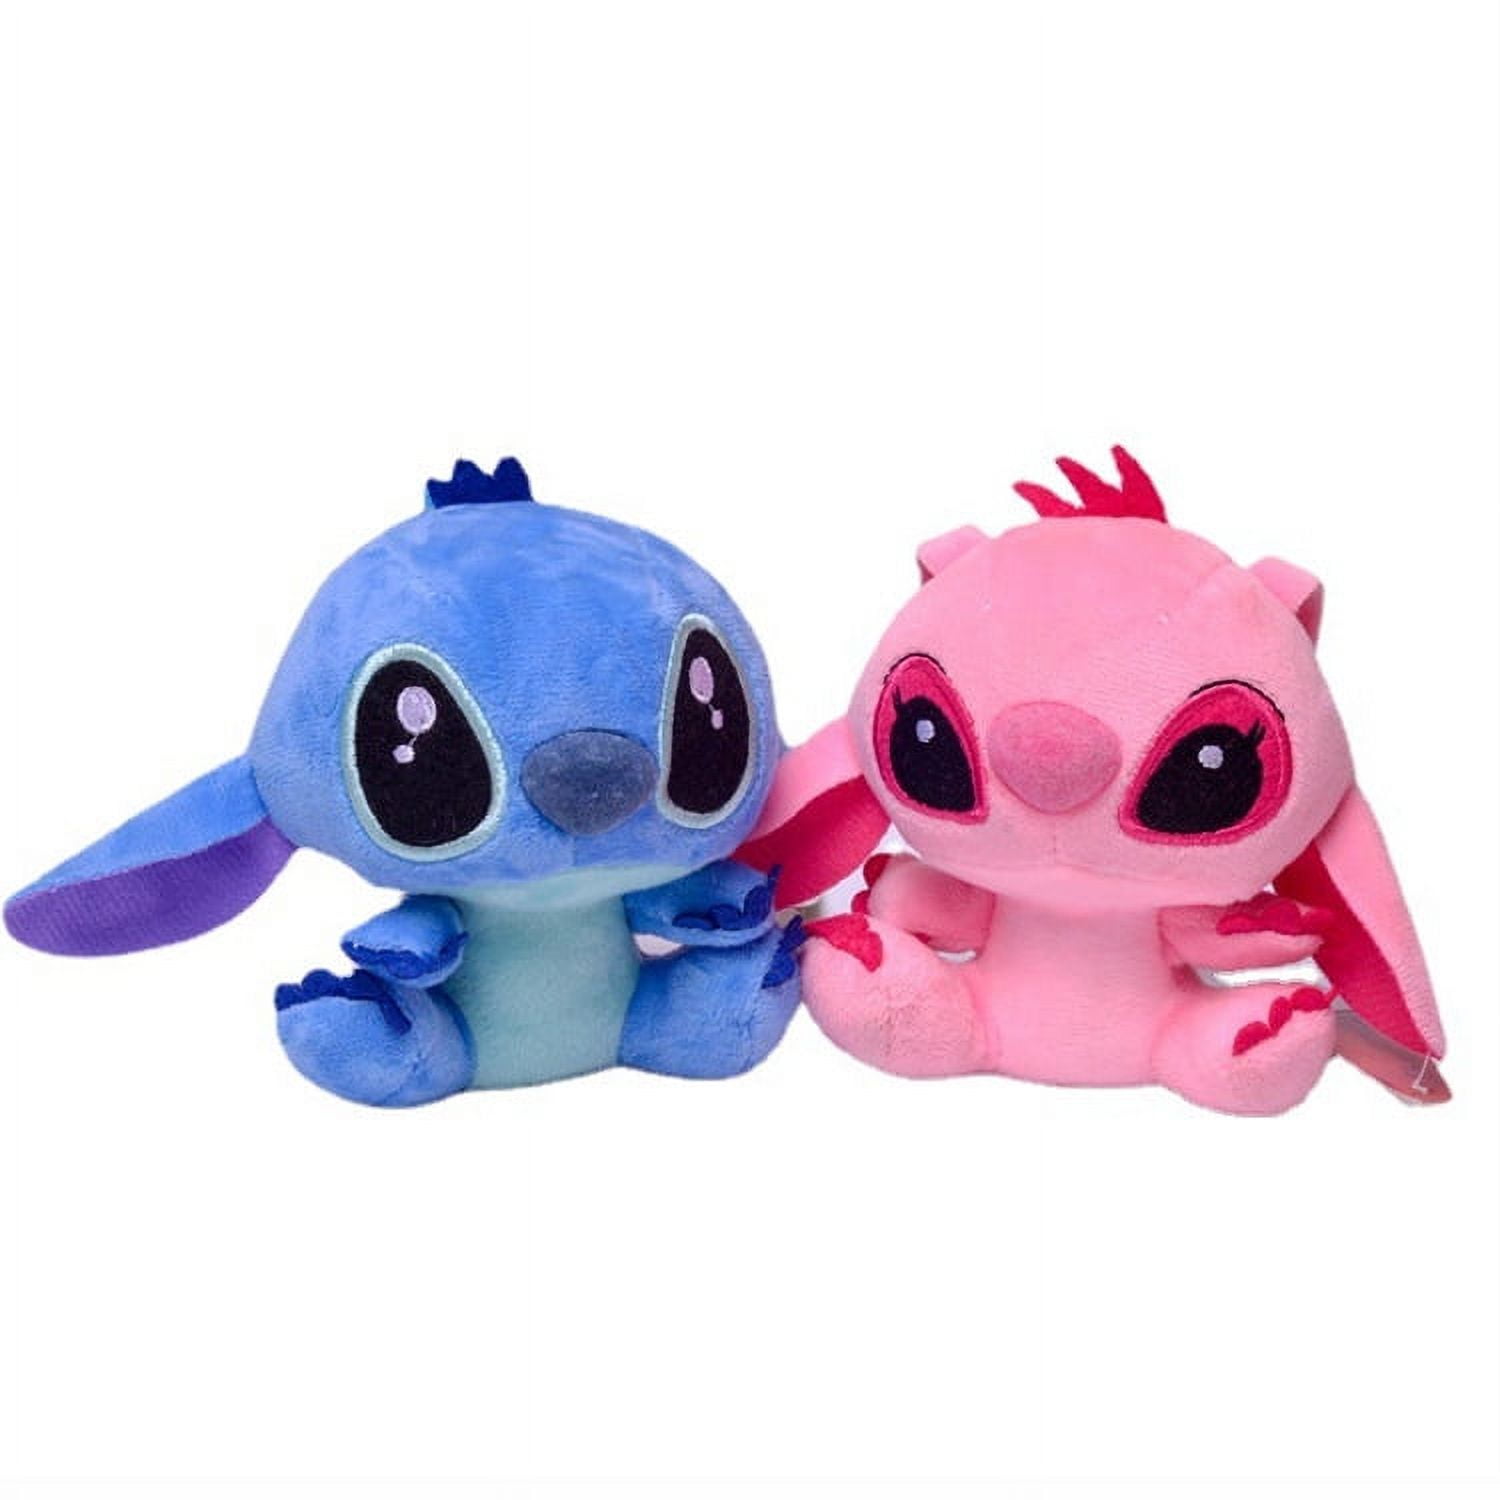 Liko And Stitchdisney Lilo & Stitch Plush Toy - Soft Pp Cotton